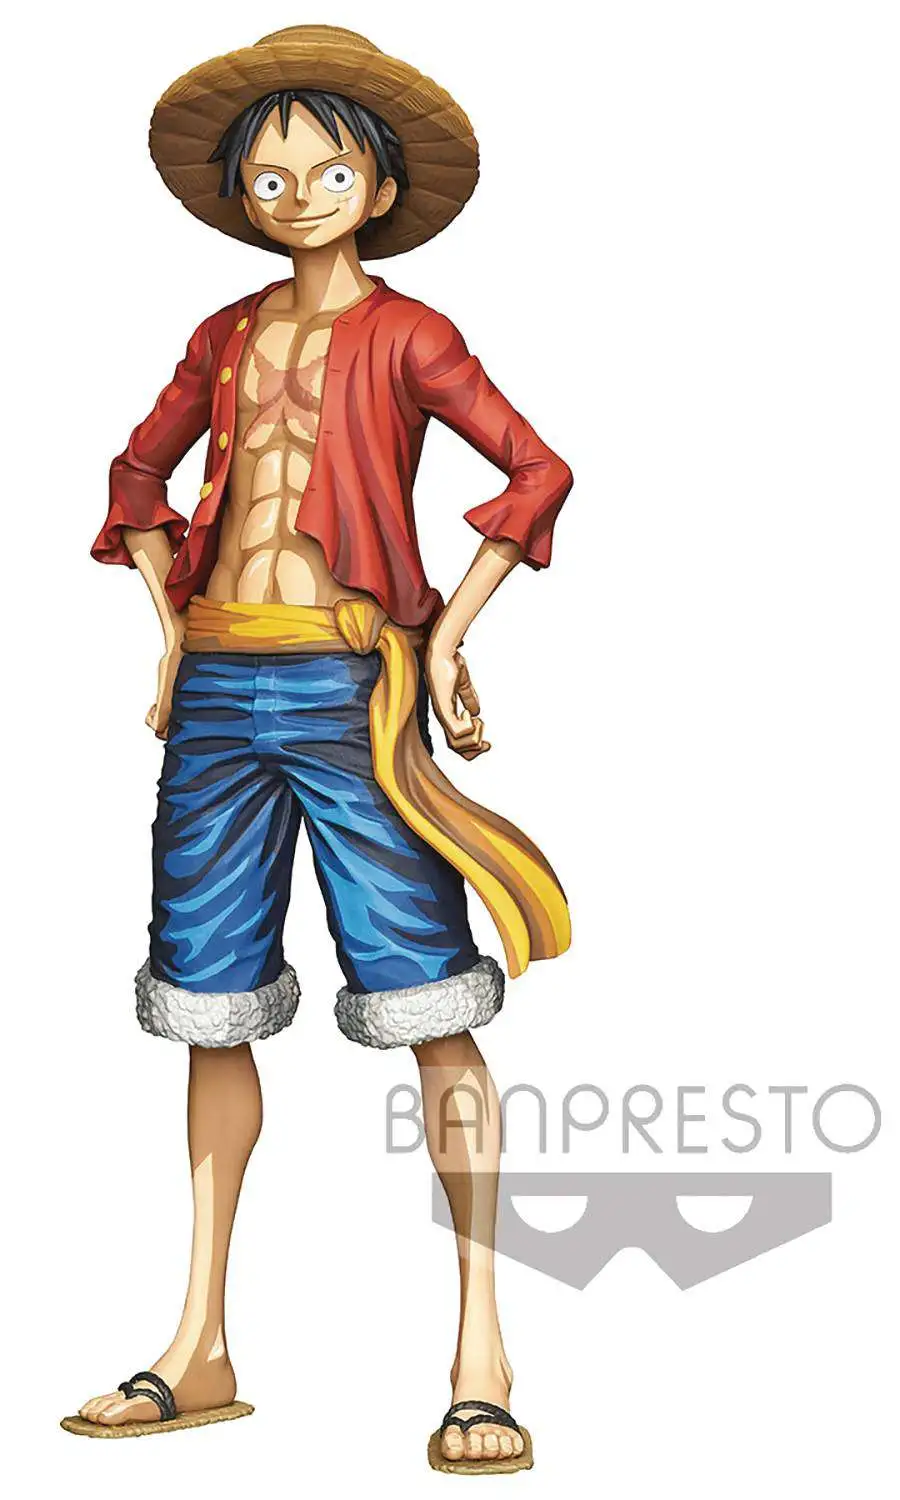 One Piece Monkey D. Luffy Chest Scar - One Piece Luffy - Baby Bodysuit